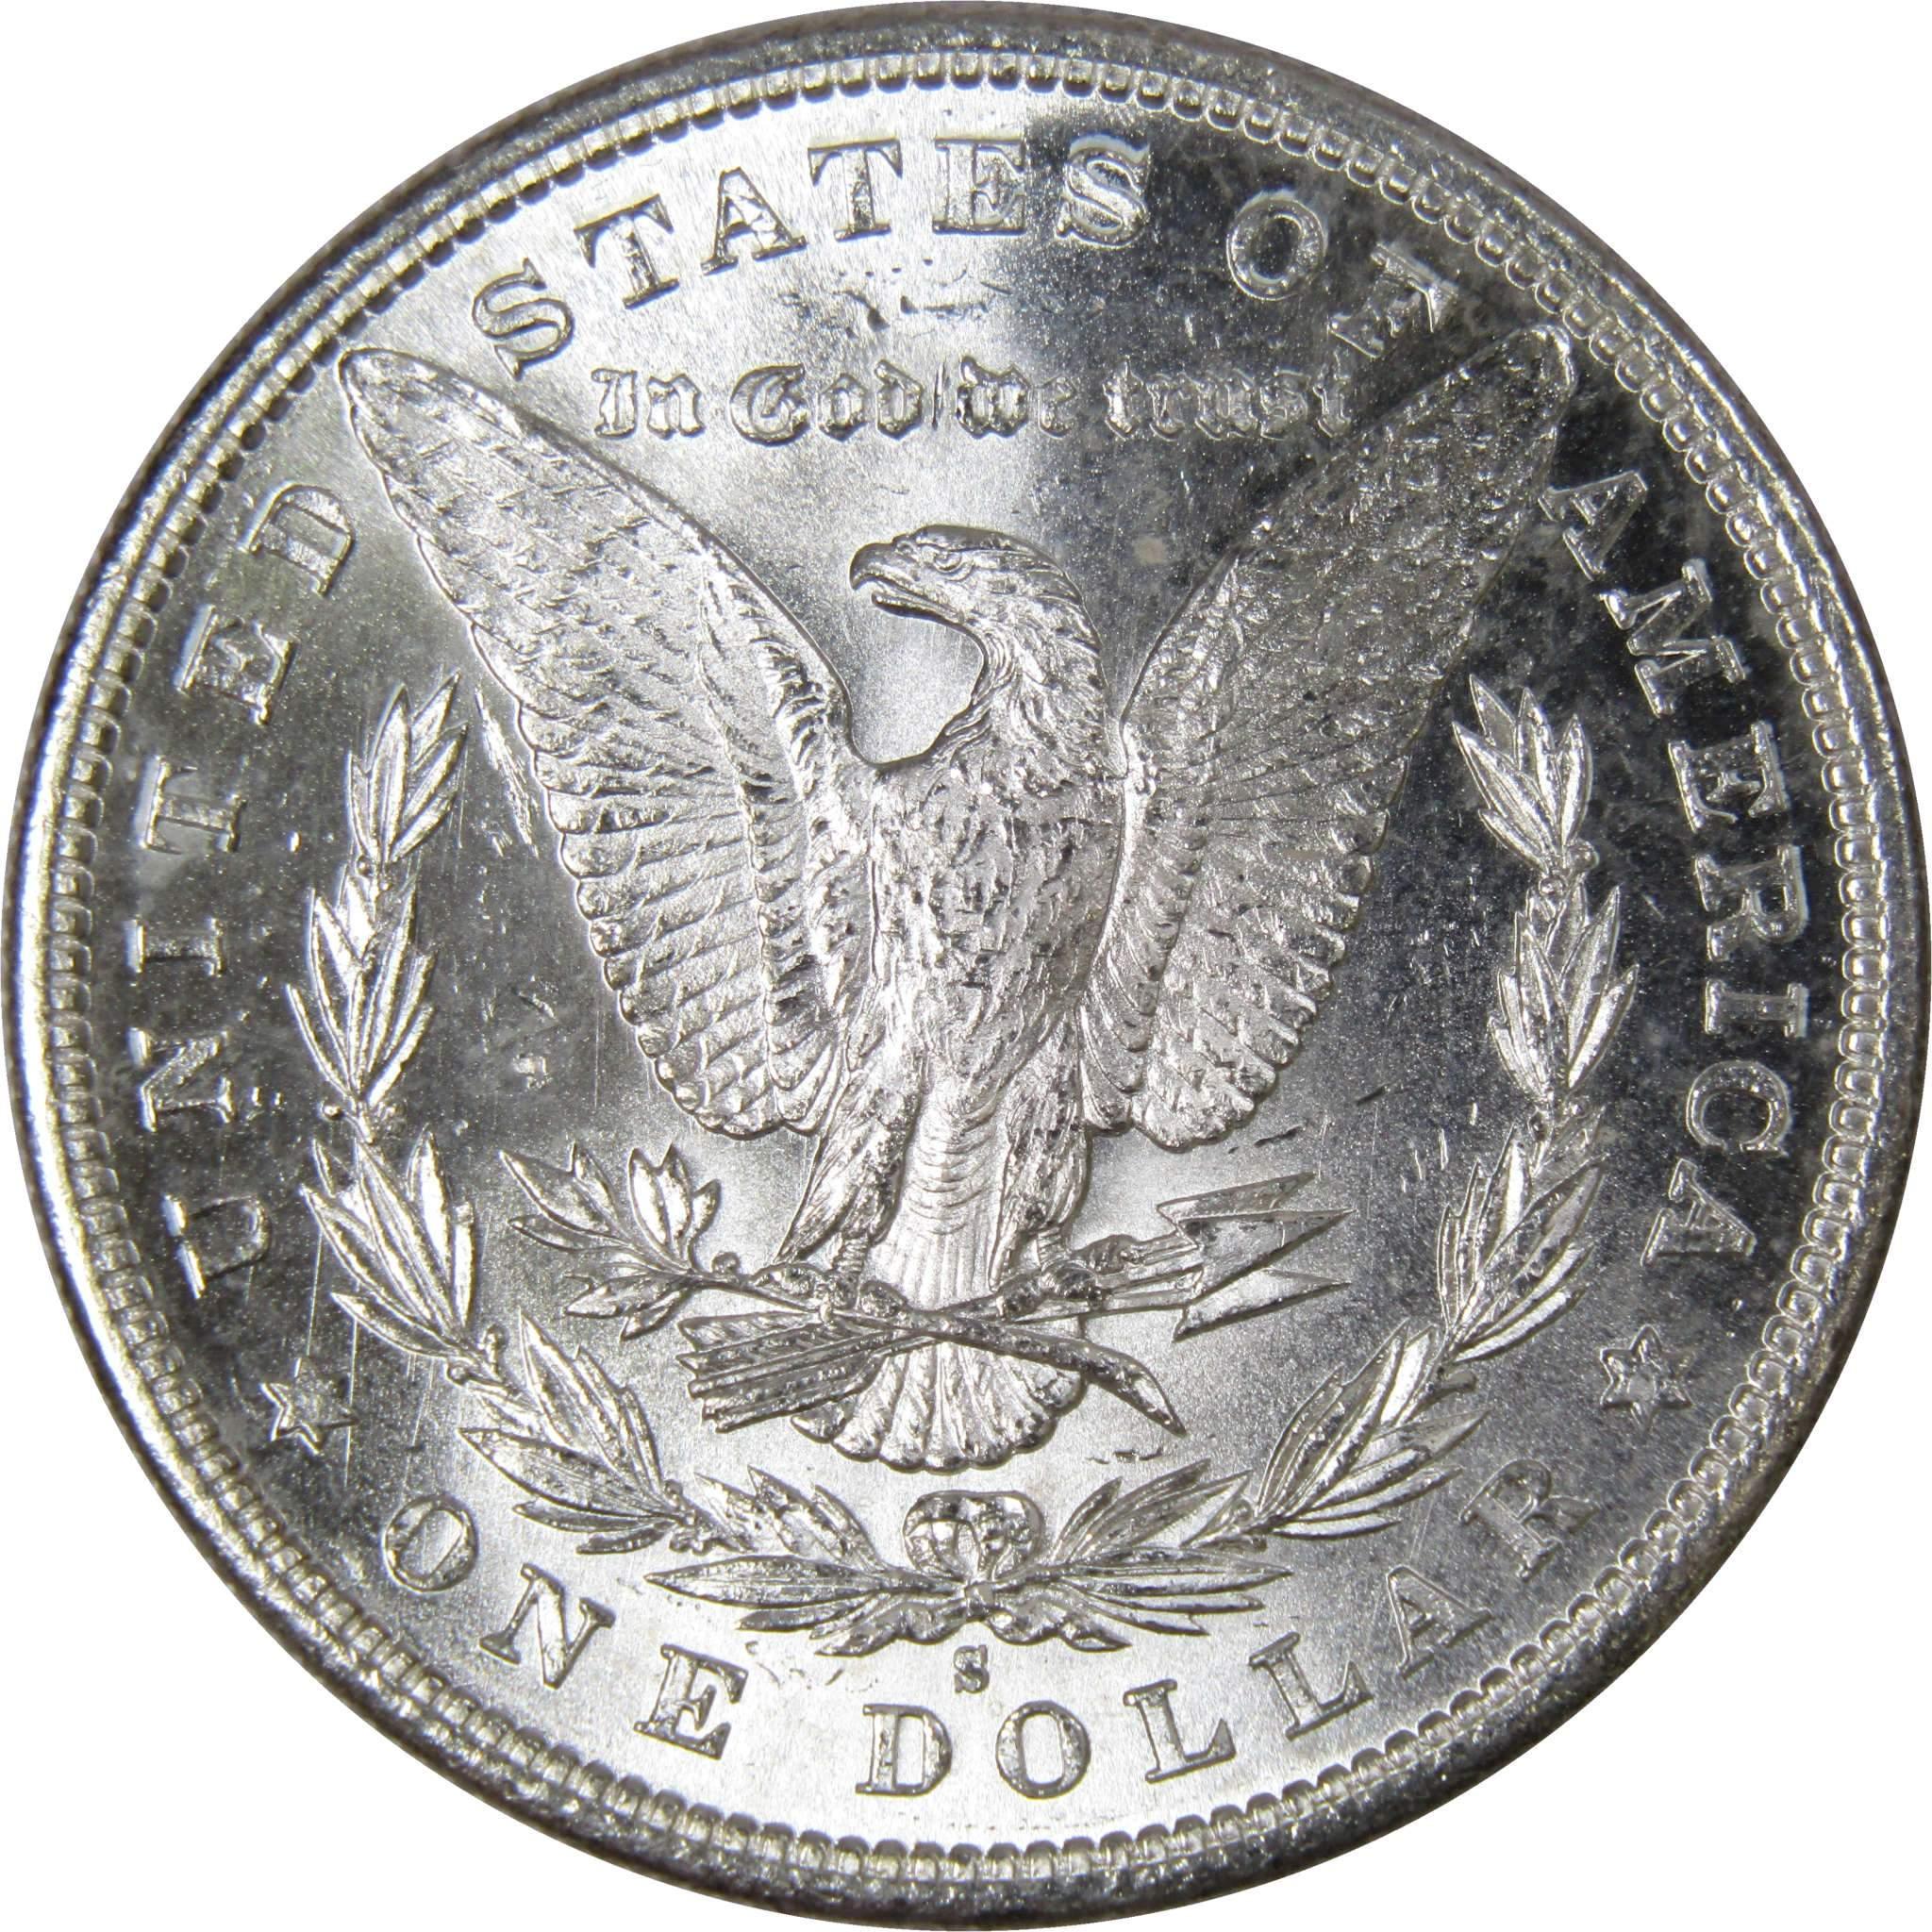 1881 S Morgan Dollar BU Uncirculated Mint State 90% Silver $1 US Coin - Morgan coin - Morgan silver dollar - Morgan silver dollar for sale - Profile Coins &amp; Collectibles